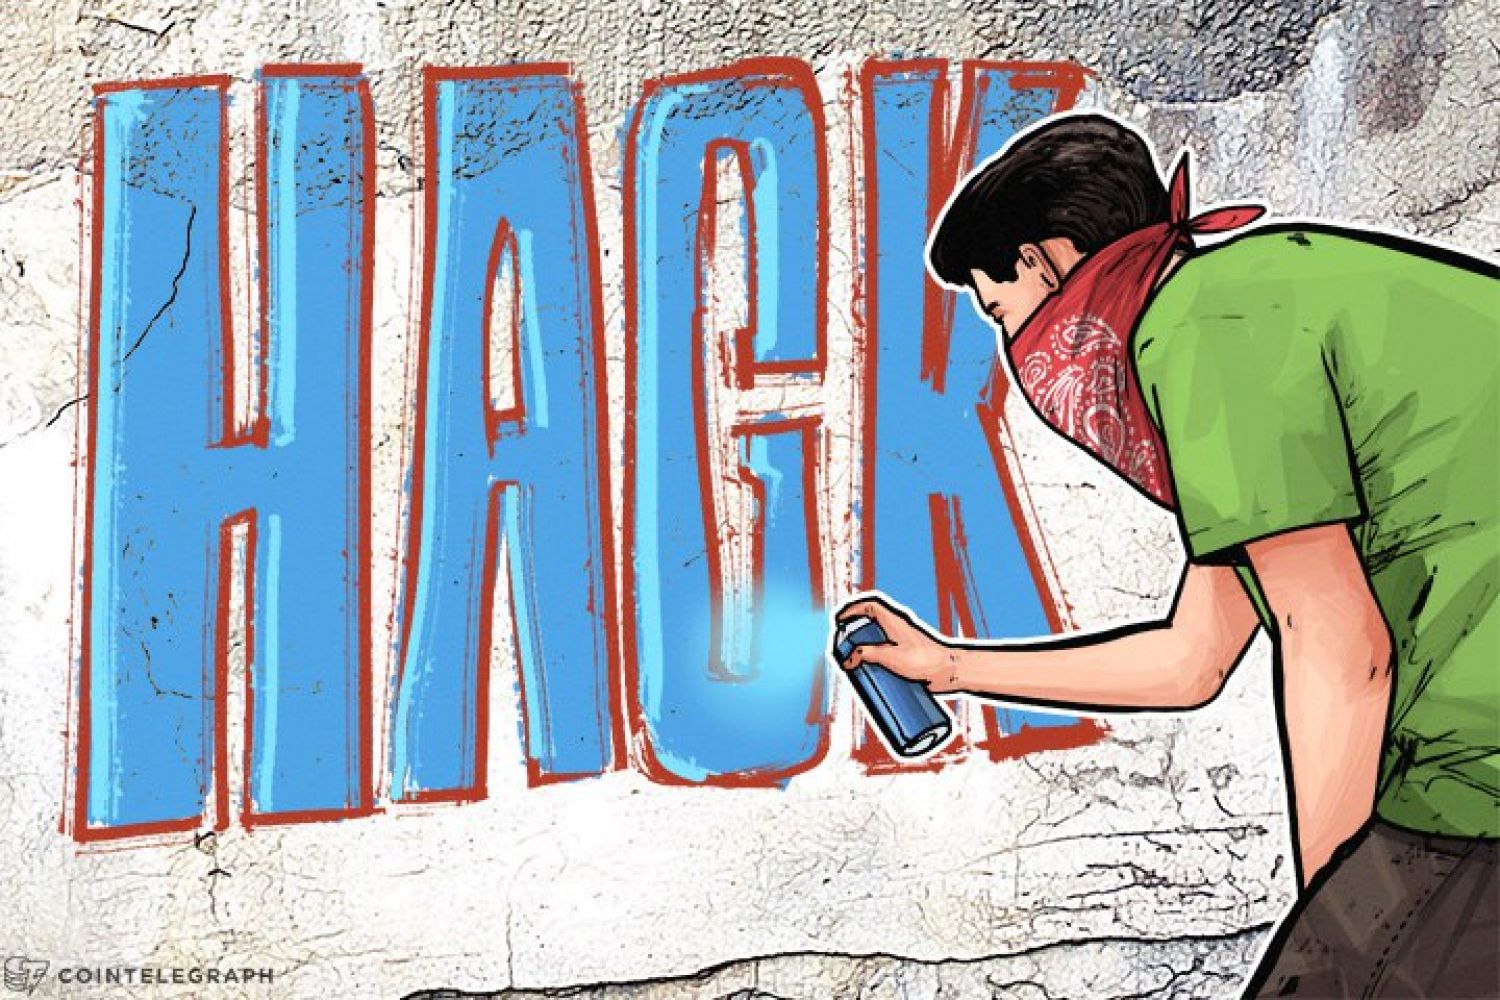 A graffiti artist drawing the word “Hack”